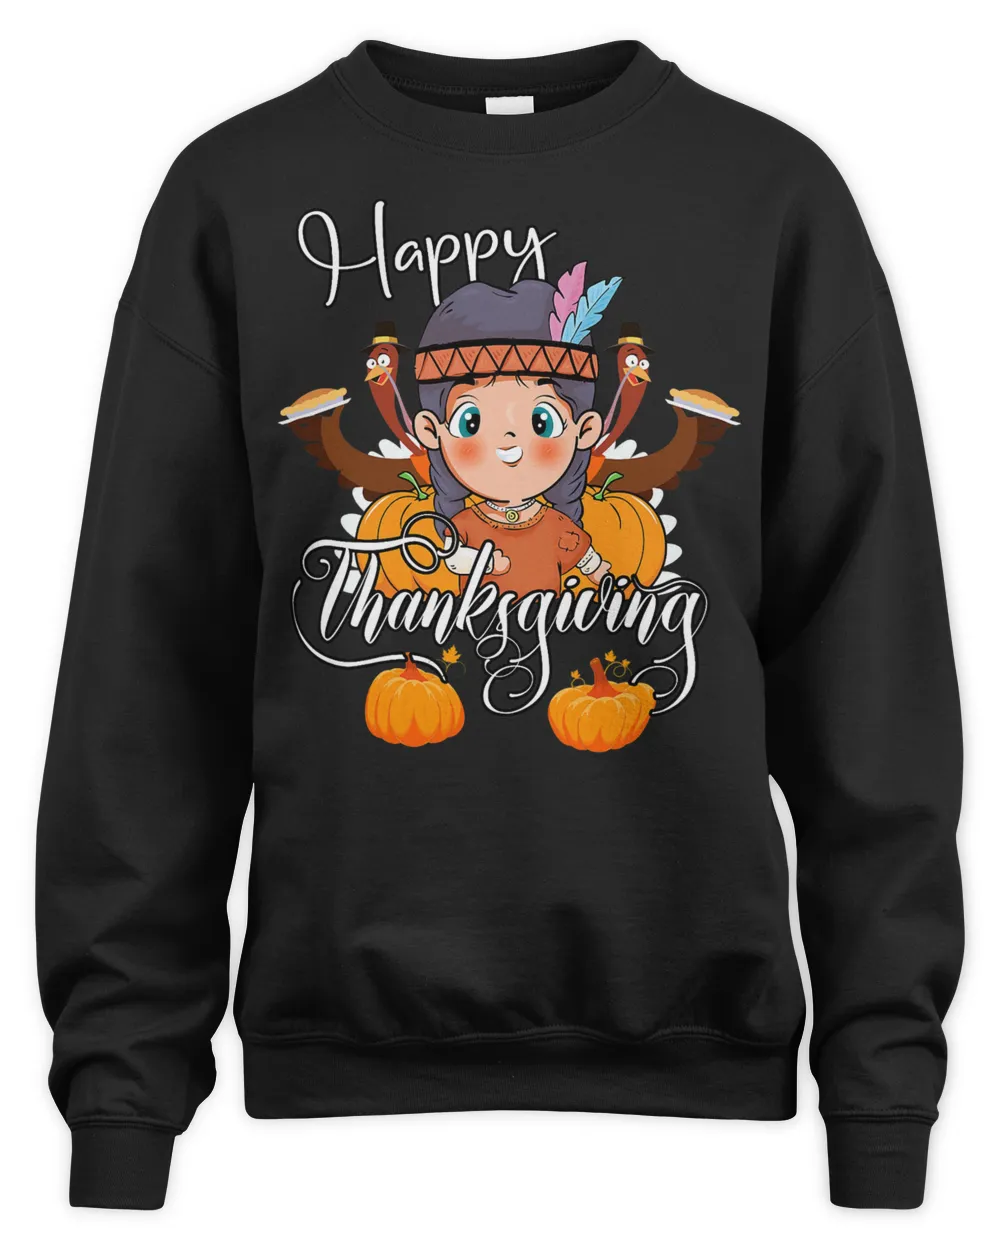 Thanksgiving Day Native American Turkey Cute Girl Headdress T-Shirt